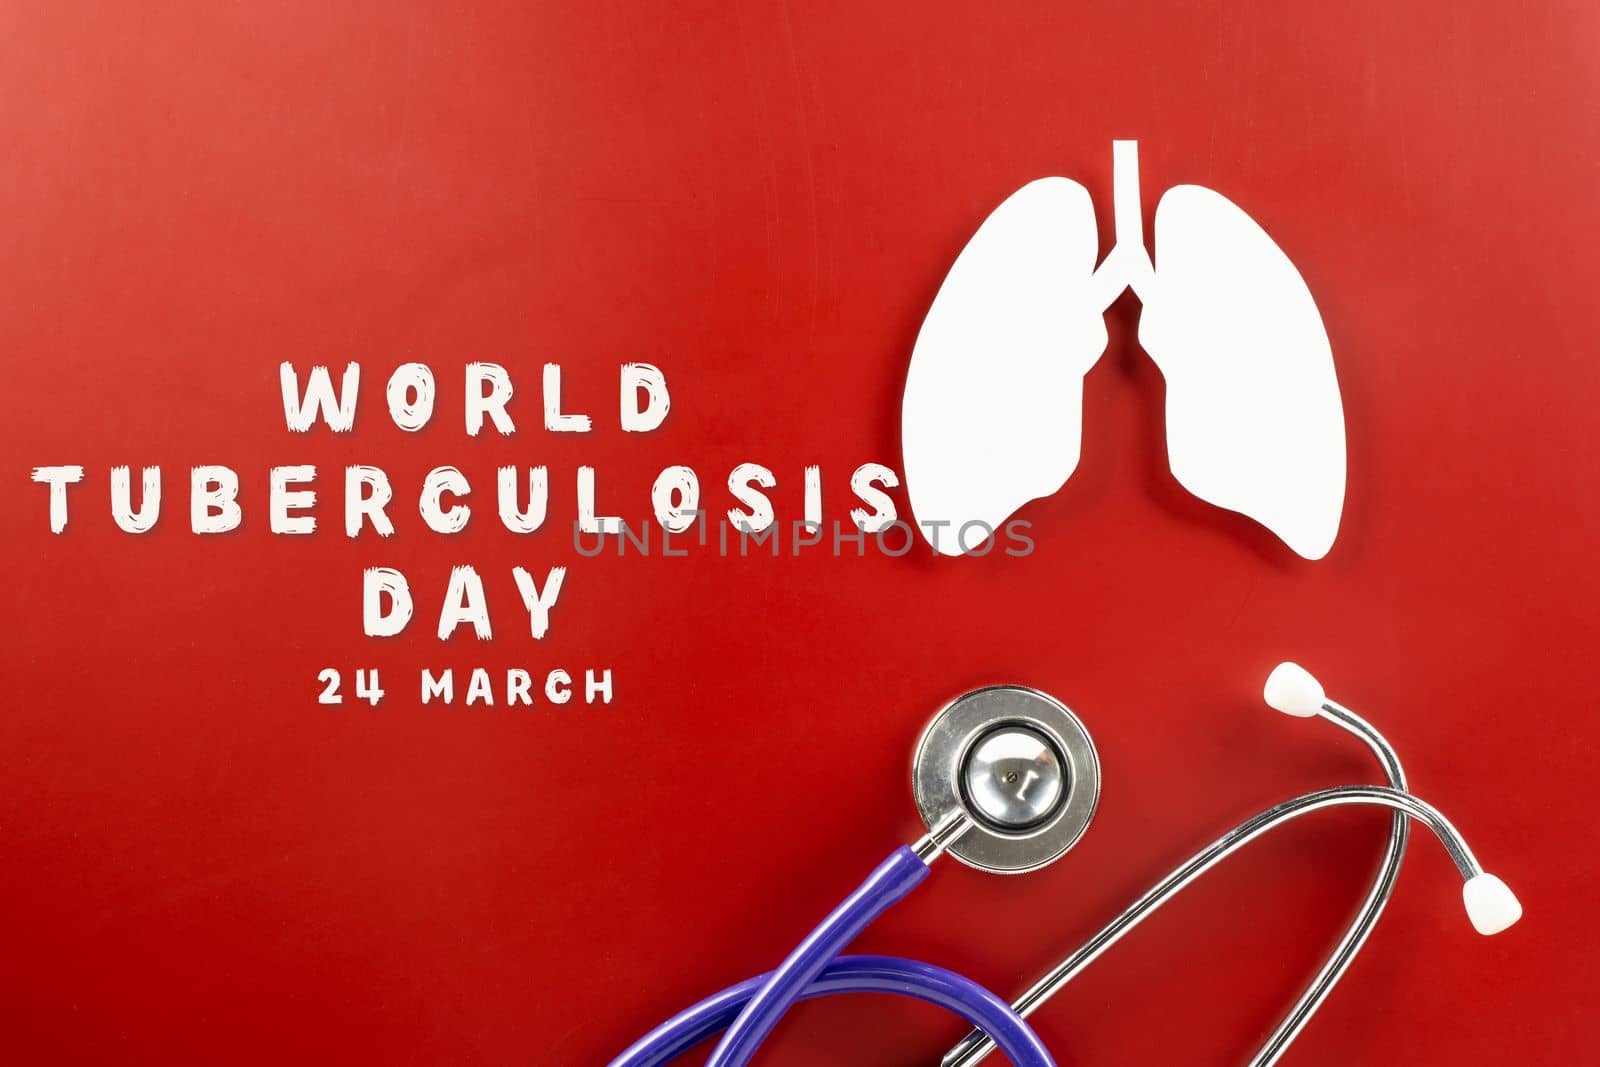 world tuberculosis day by Sorapop